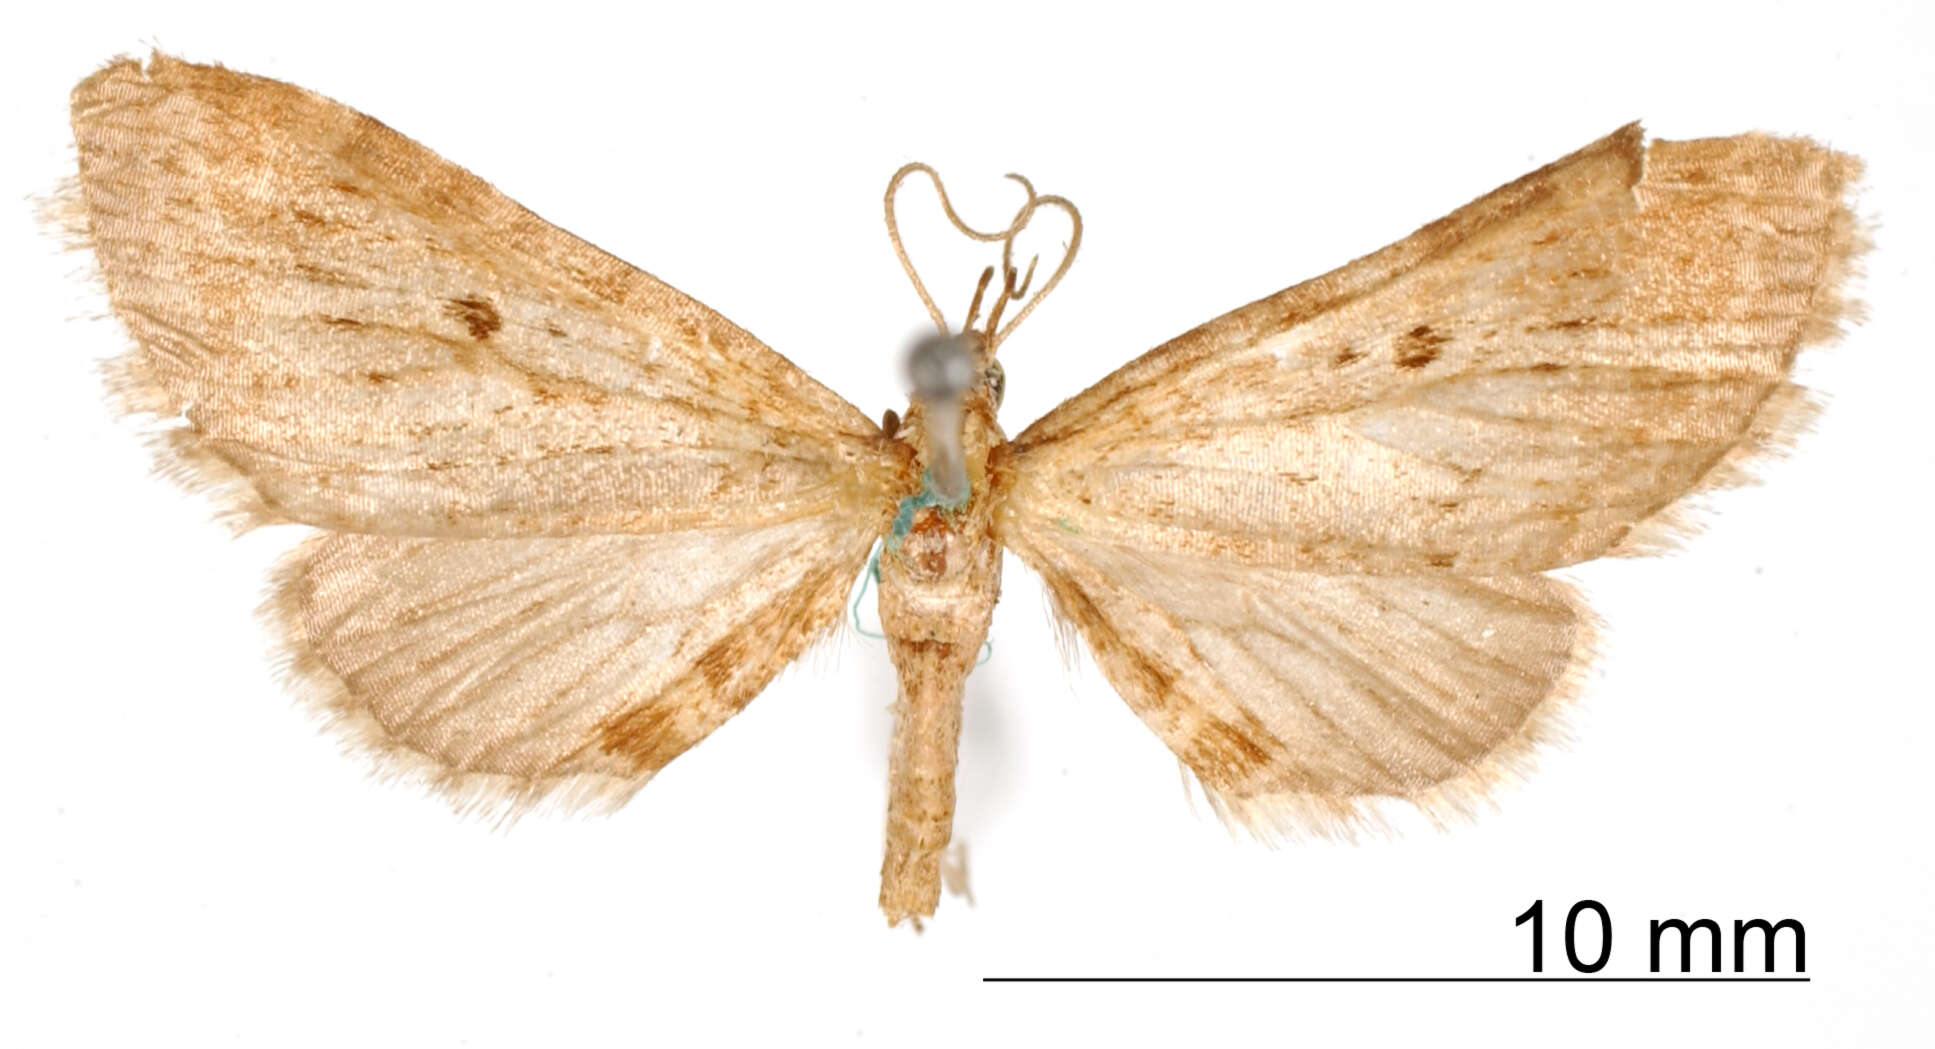 Image of Eupithecia placens Warren 1906